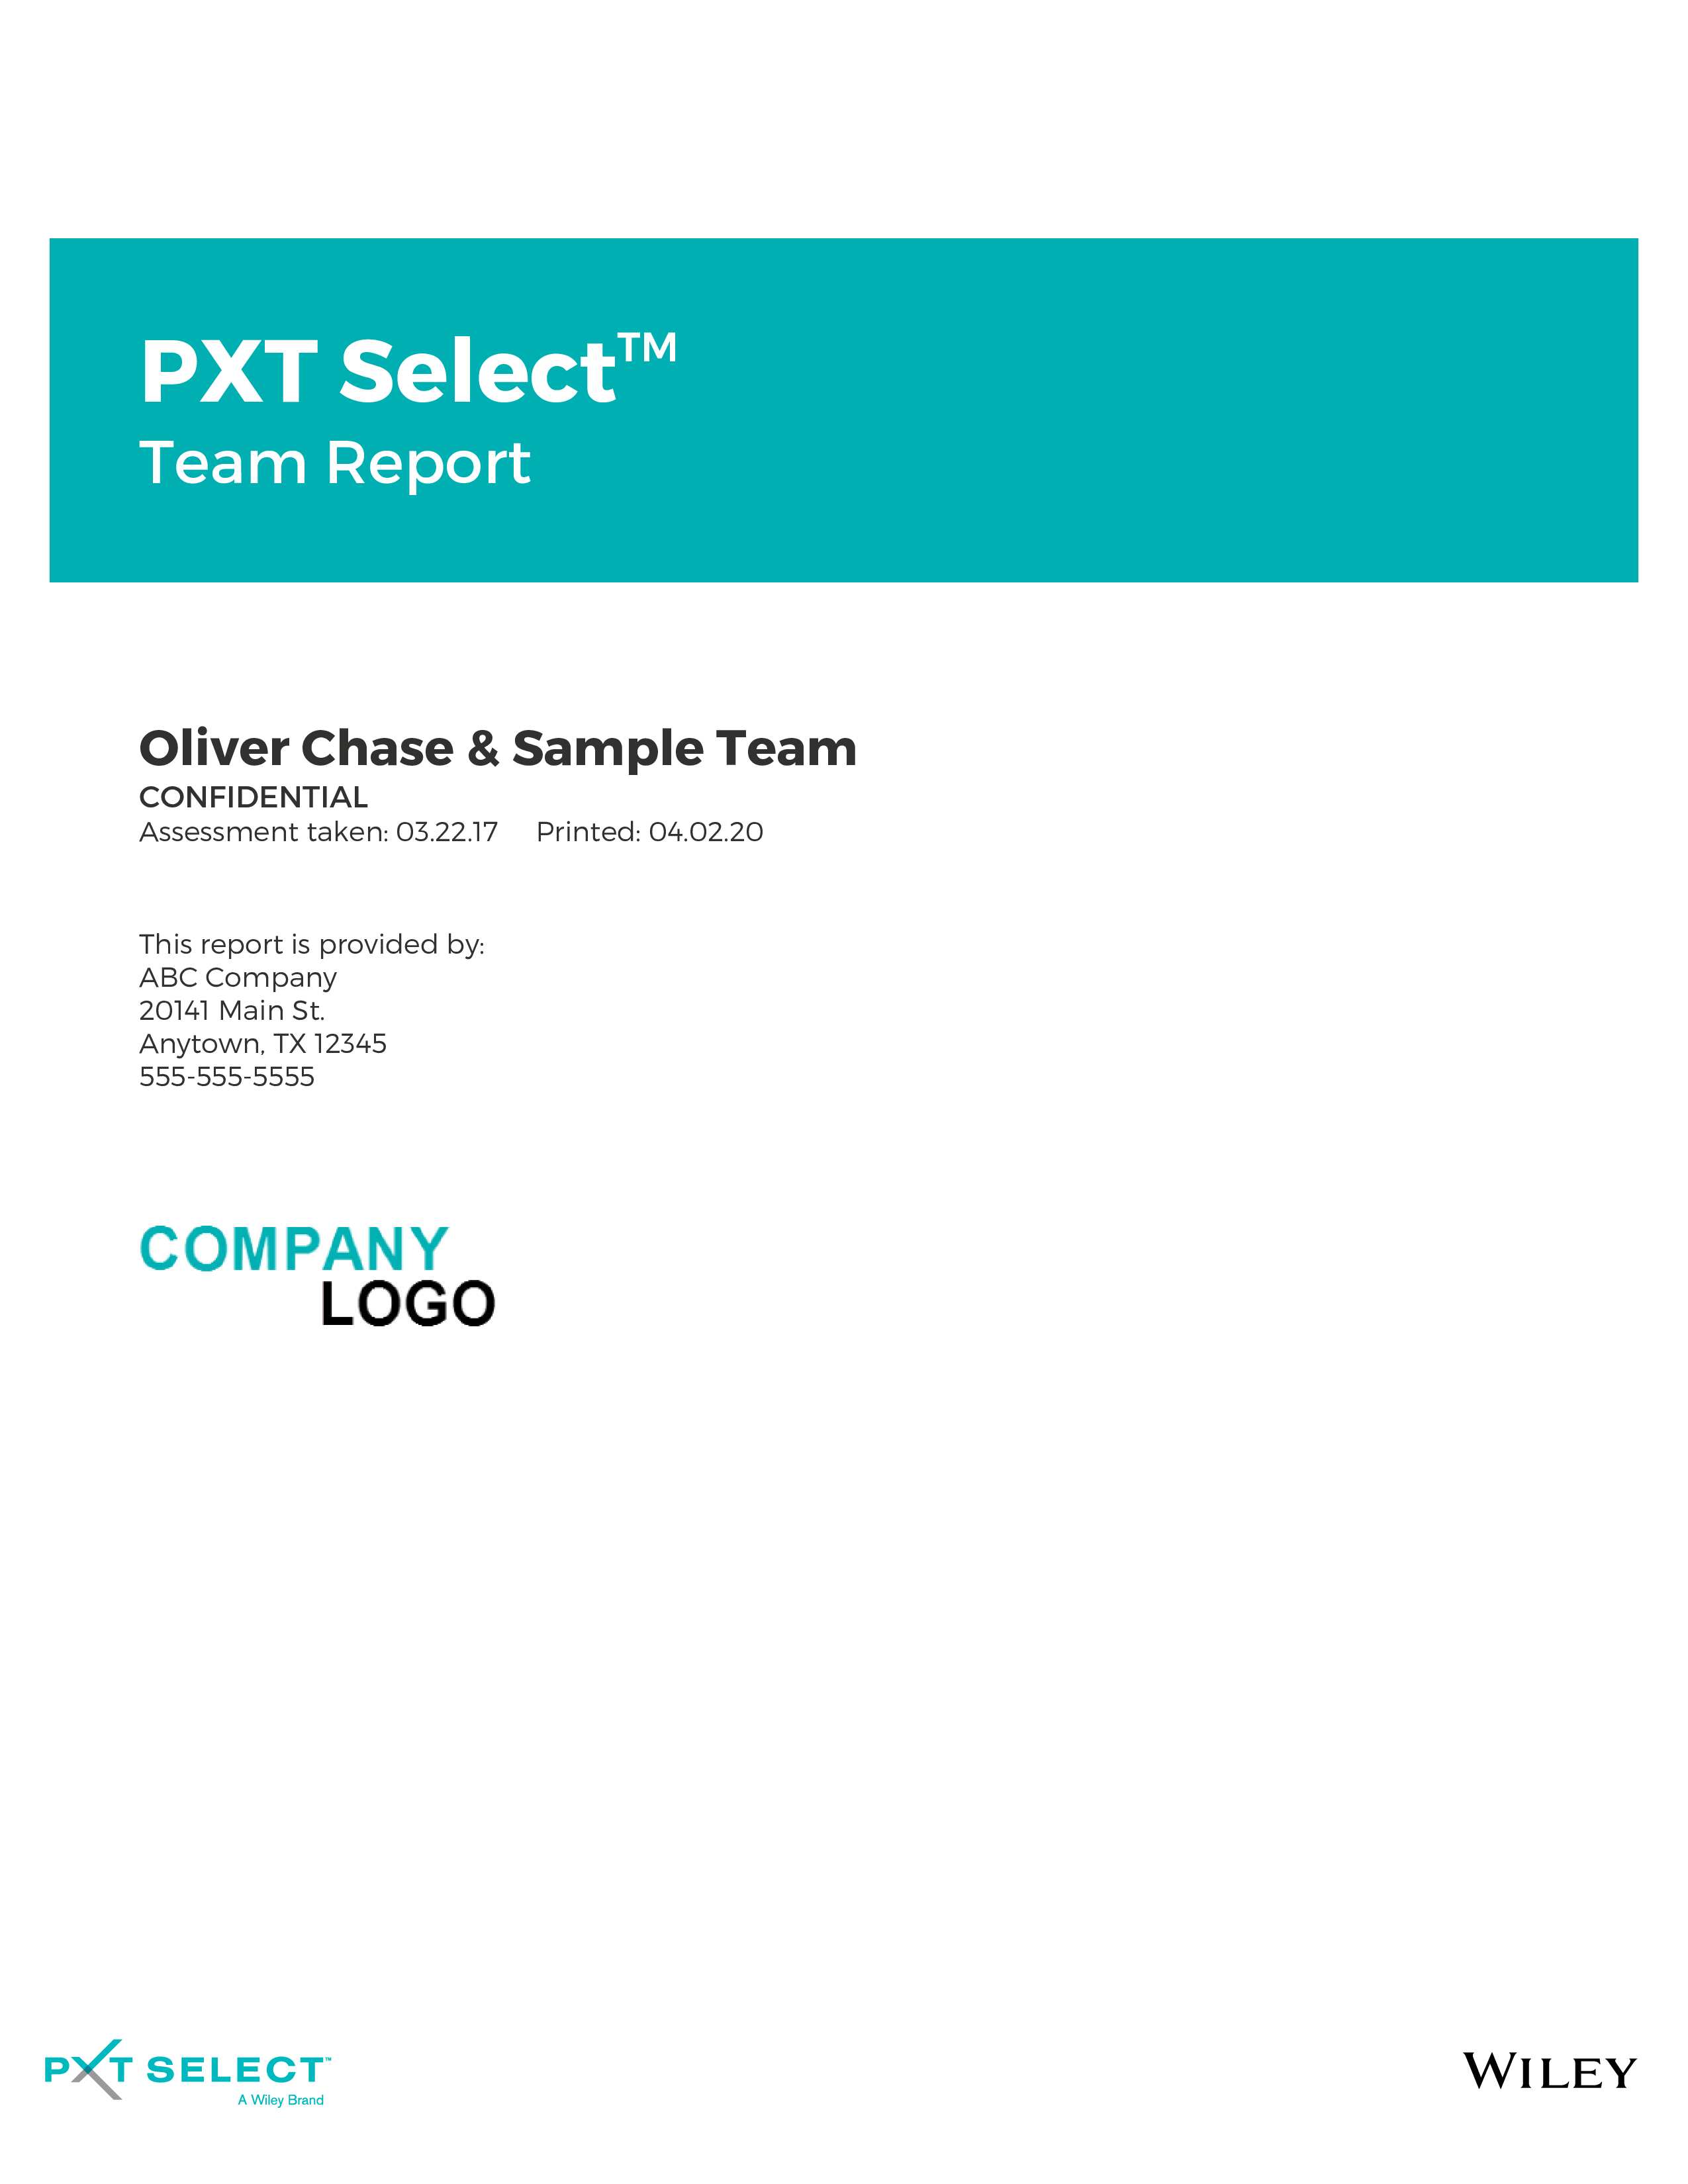 PXT Select Team Report November 2021 Image